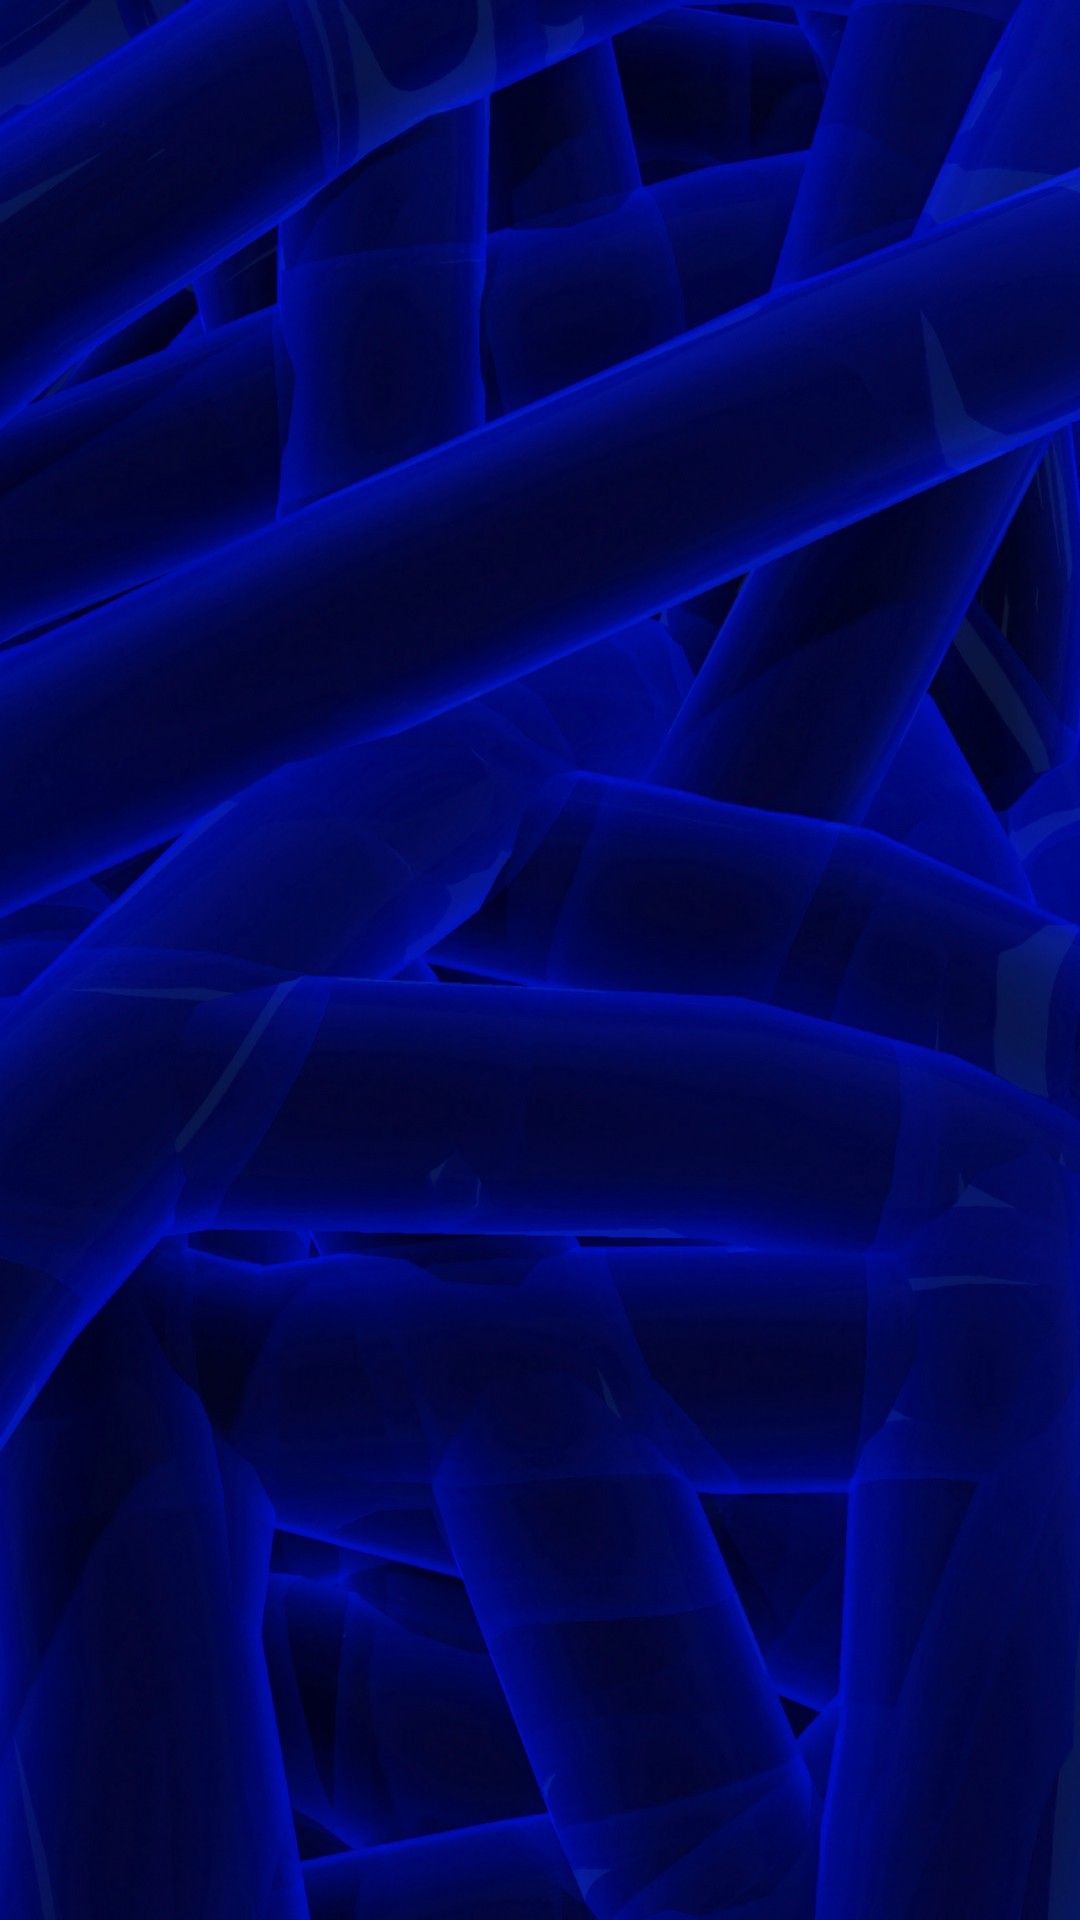 Blue Aesthetic Neon Wallpapers On Wallpaperdog